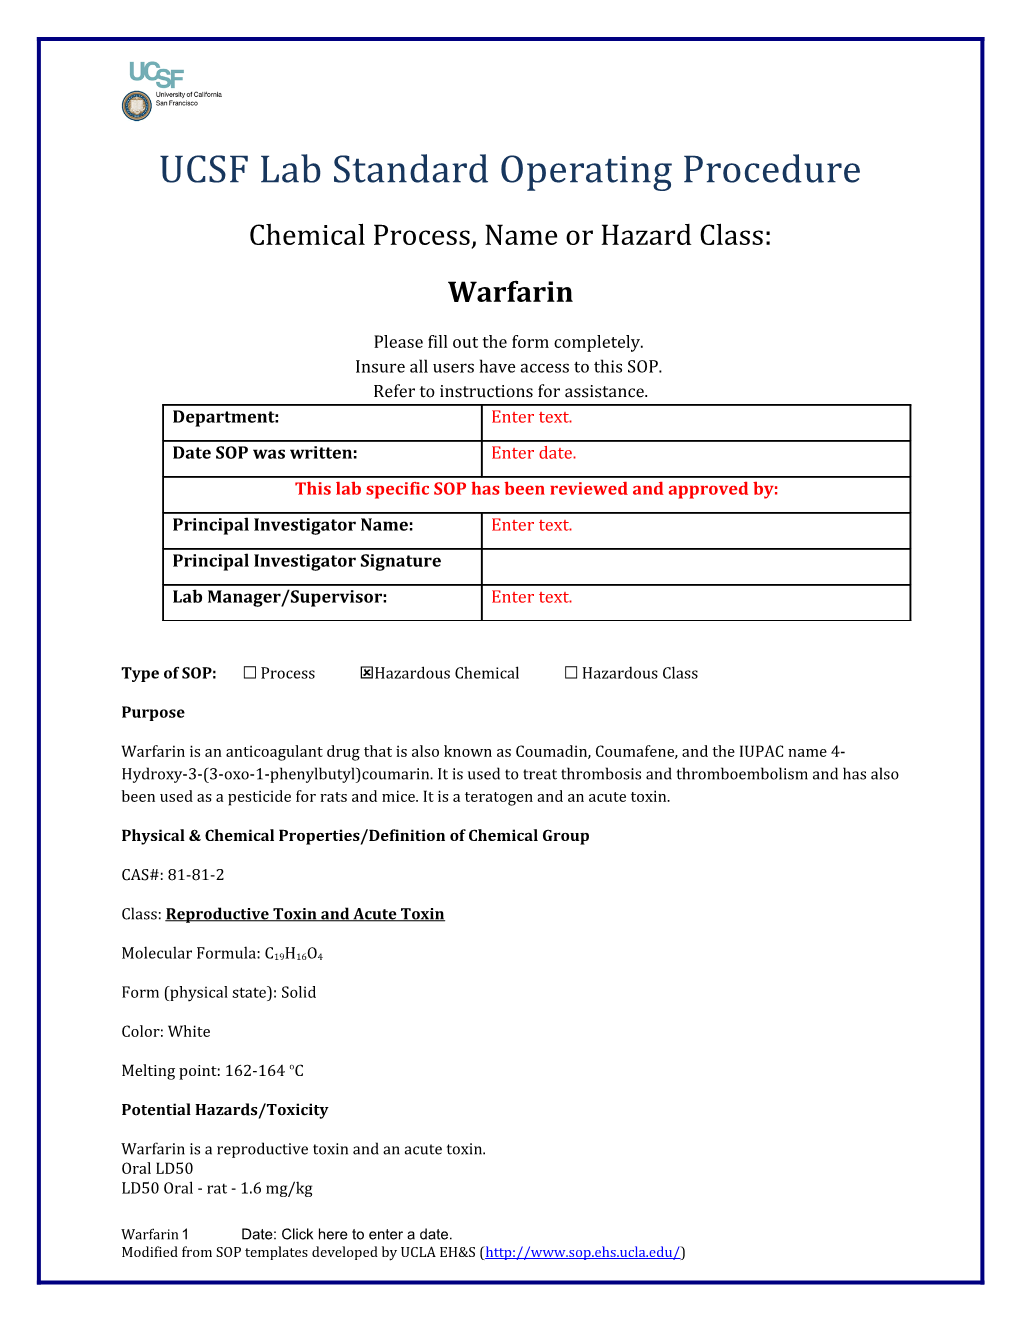 UCSF Lab Standard Operating Procedure s45